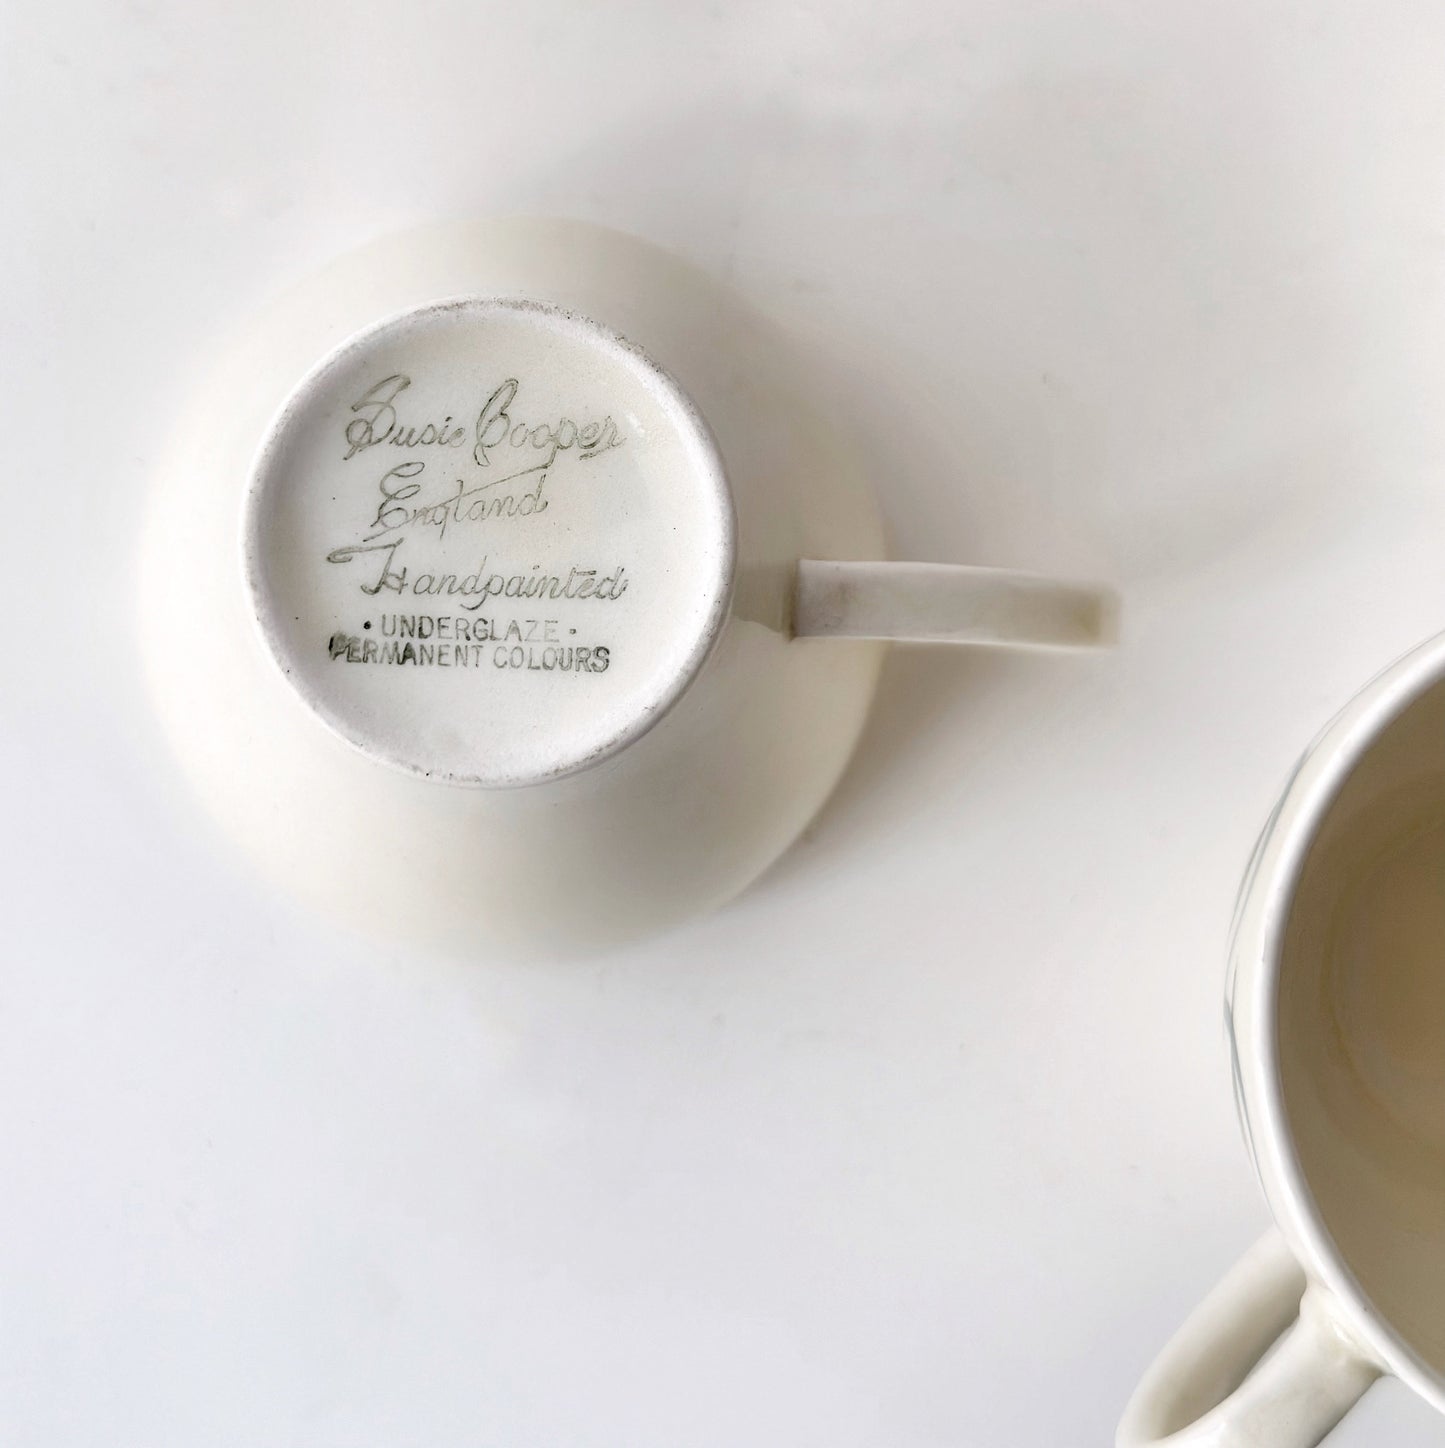 Rare Susie Cooper Teacup / Coffee Cups 1930s Art Deco